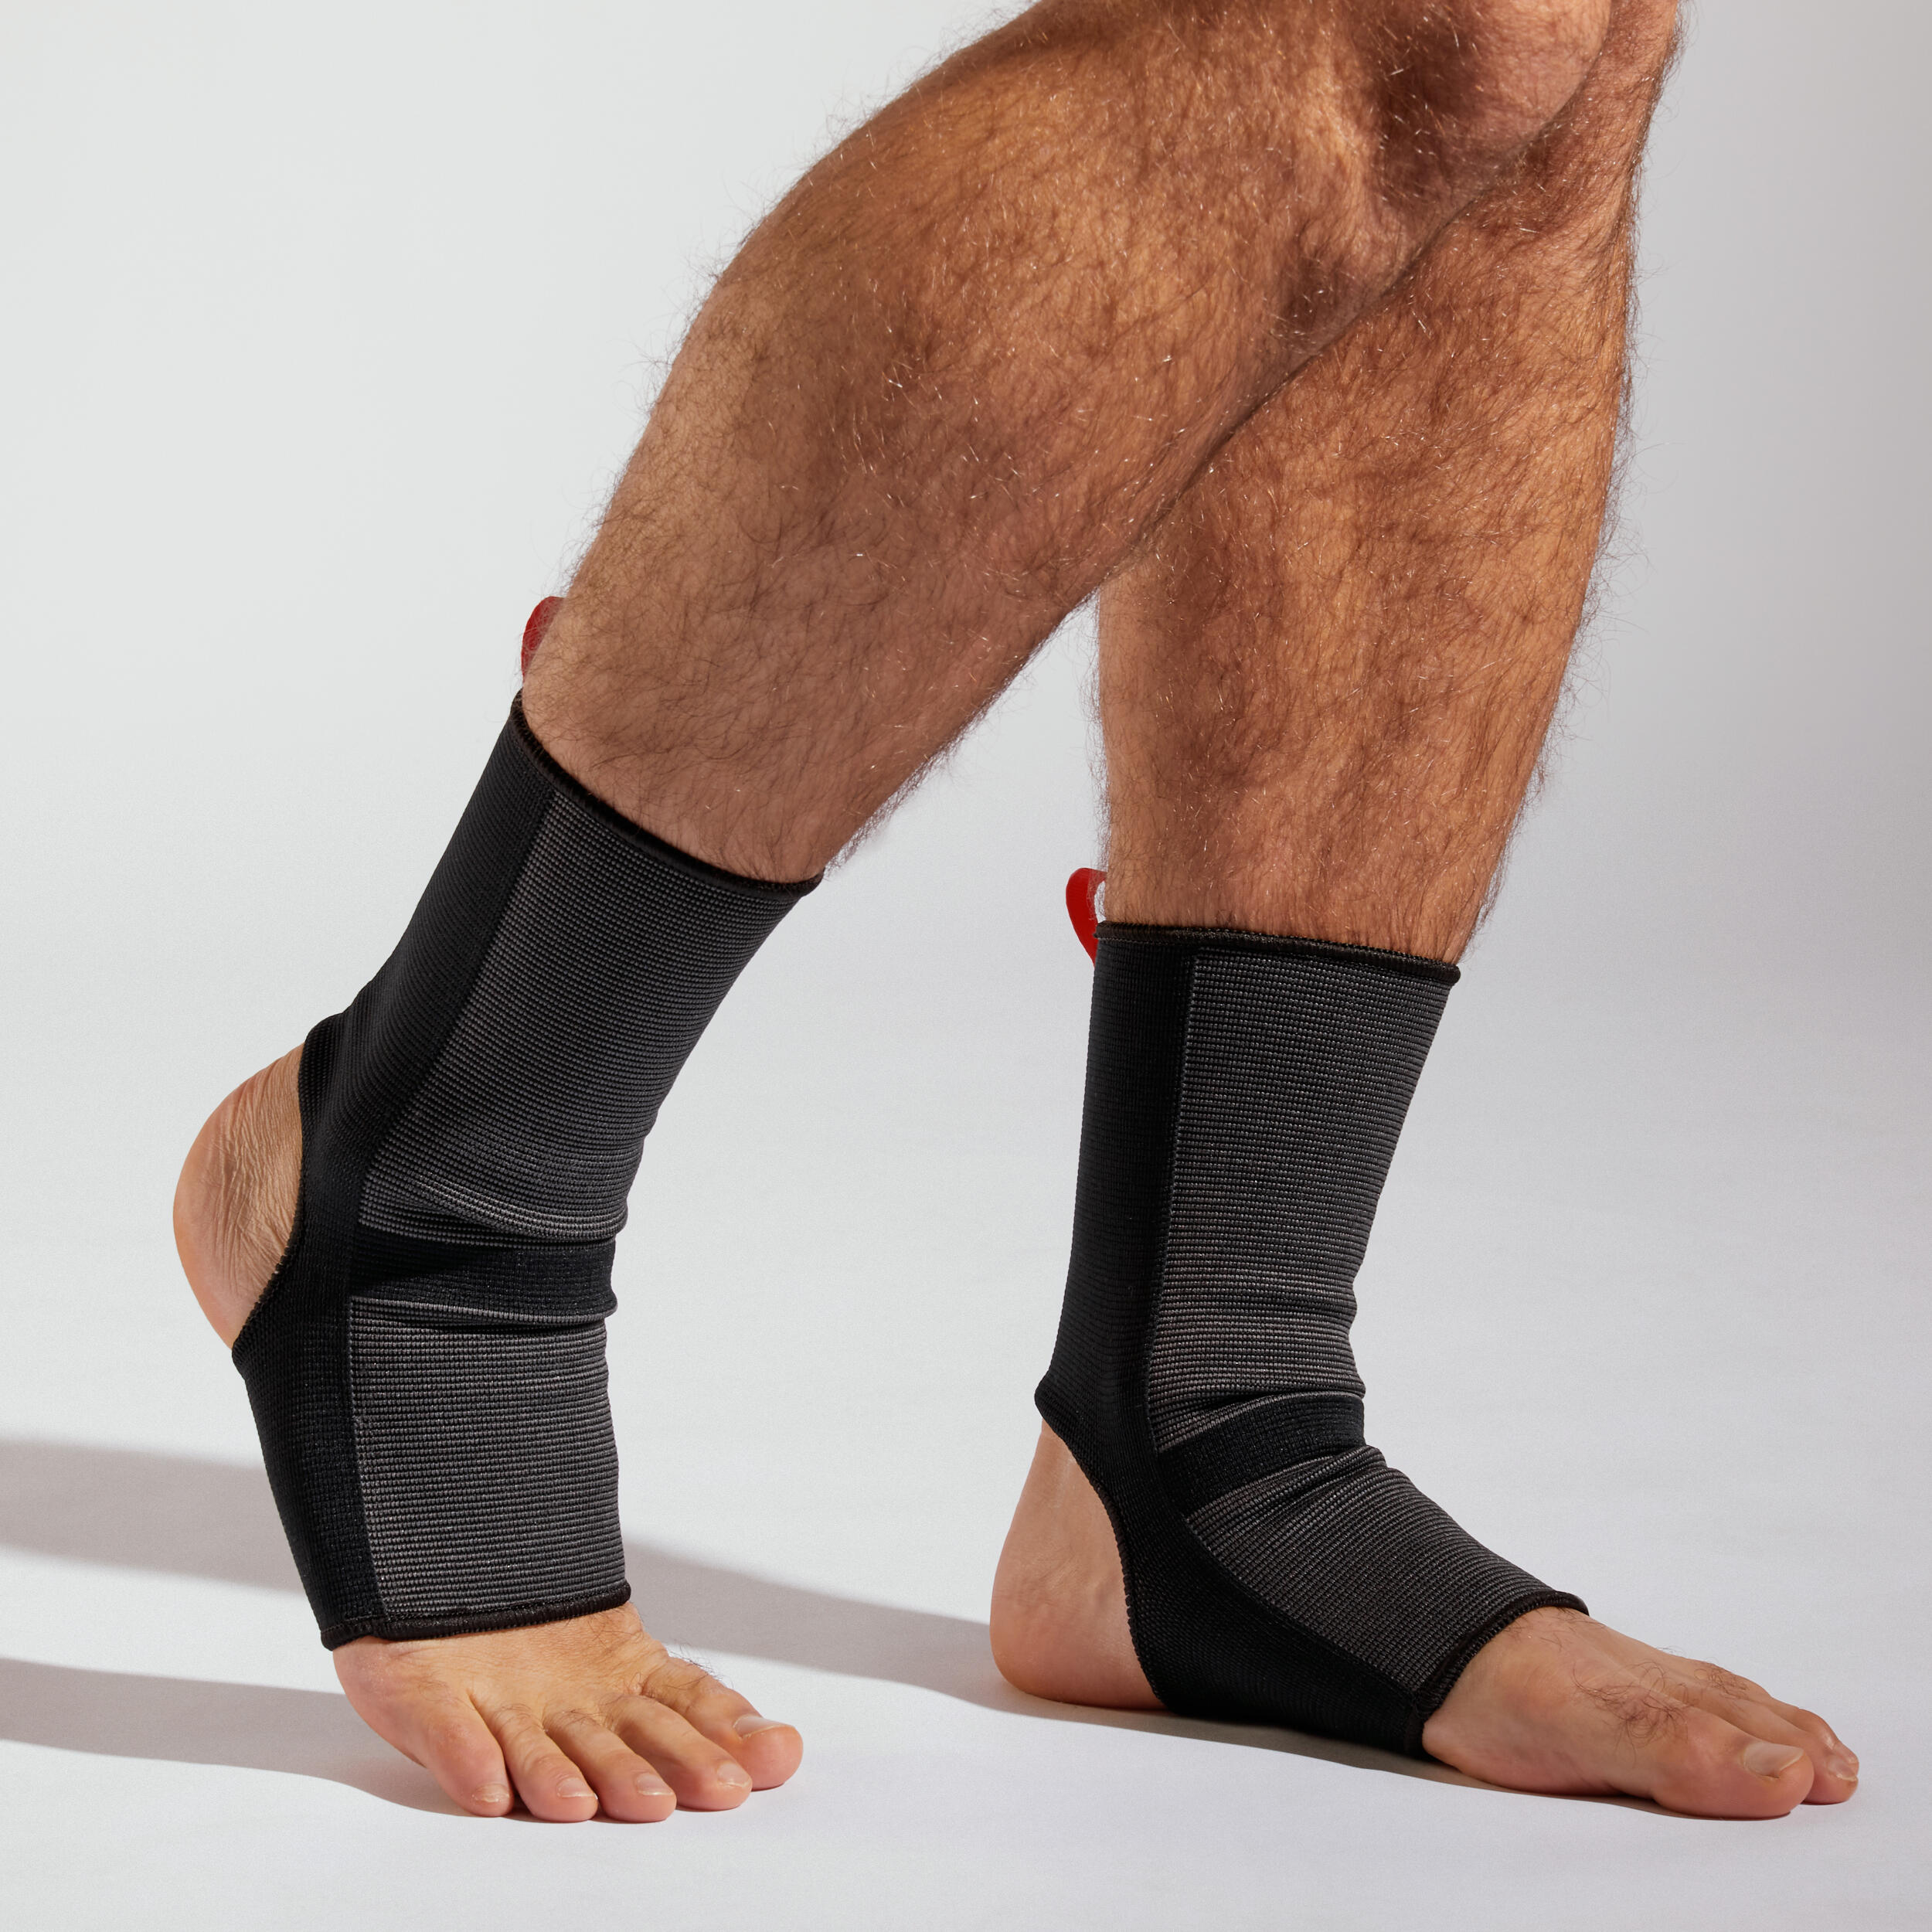 Happy Hours New Open Heel Sports Safety Neoprene Ankle Brace Support Stabilizer Foot Wrap 2 Pcs 